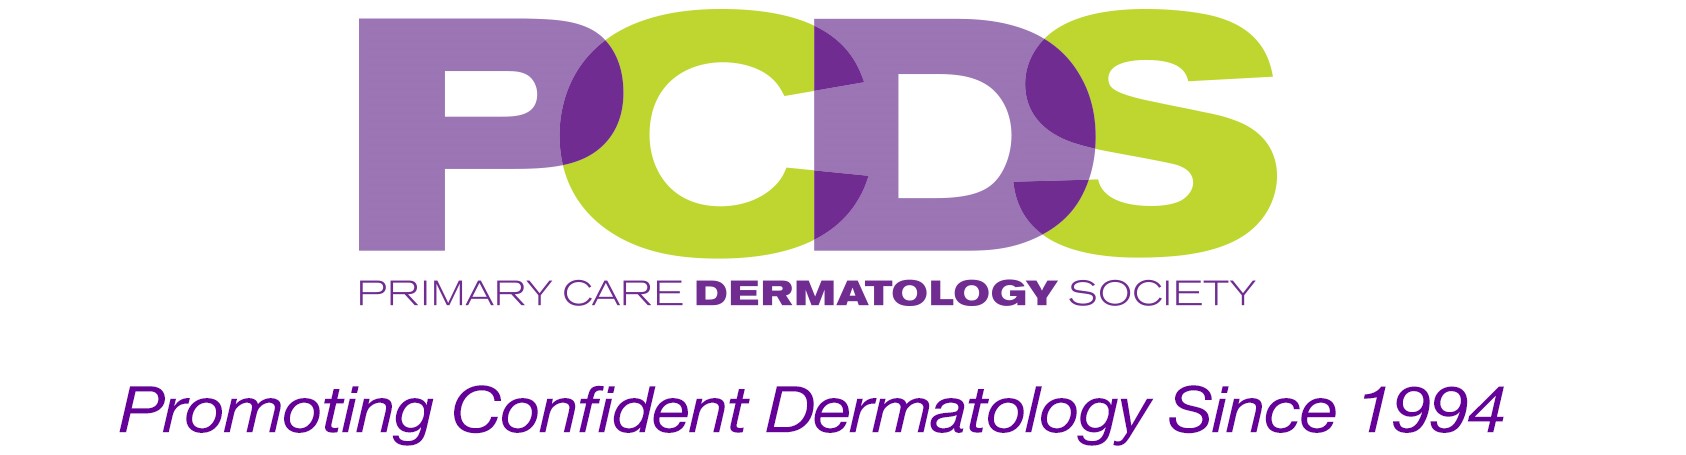 Primary Care Dermatology Society